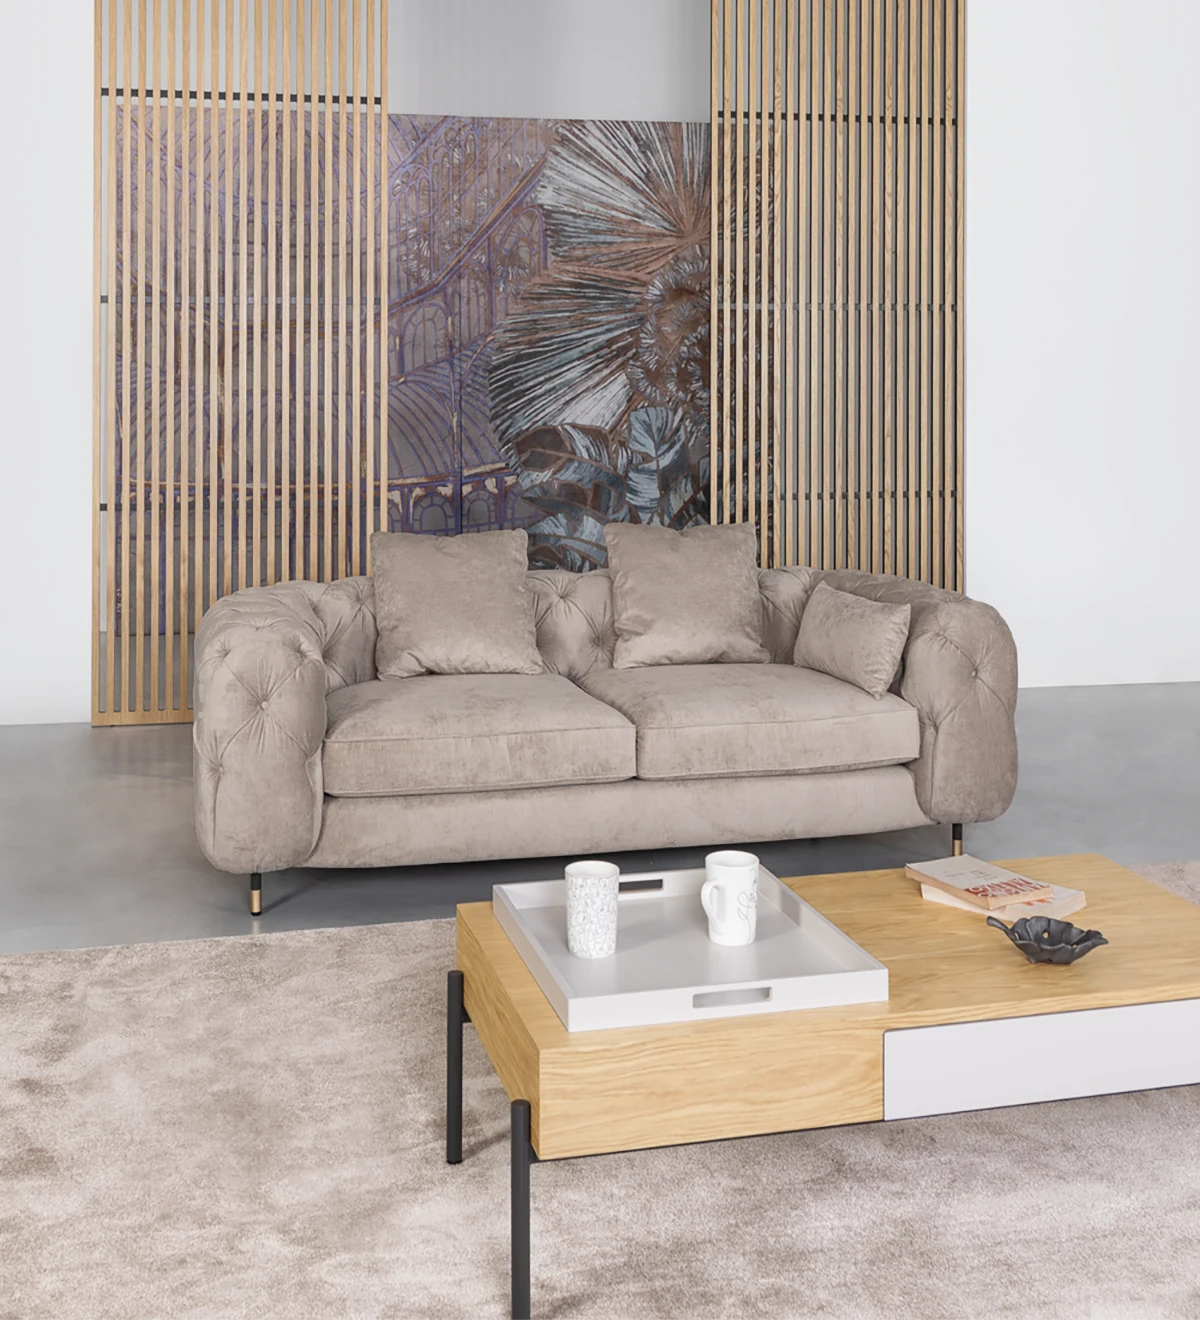 Sofá de 2 plazas tapizado en tela, con pies metálicos lacados en negro con detalle dorado.